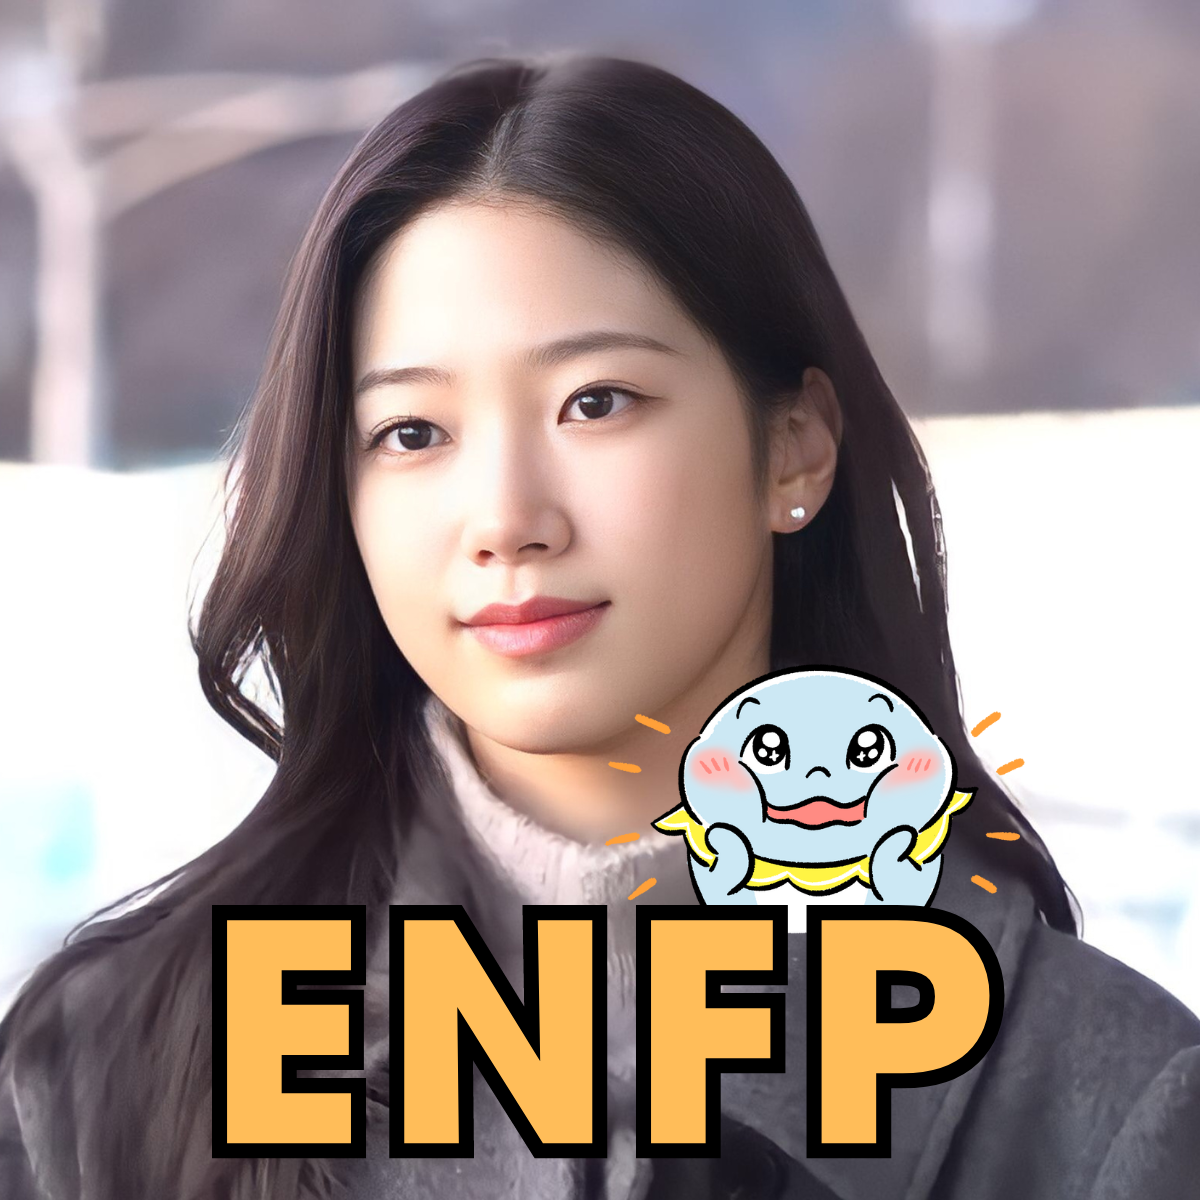 Laura Seraphim MBTI Personality Type: ENFP or ENFJ?